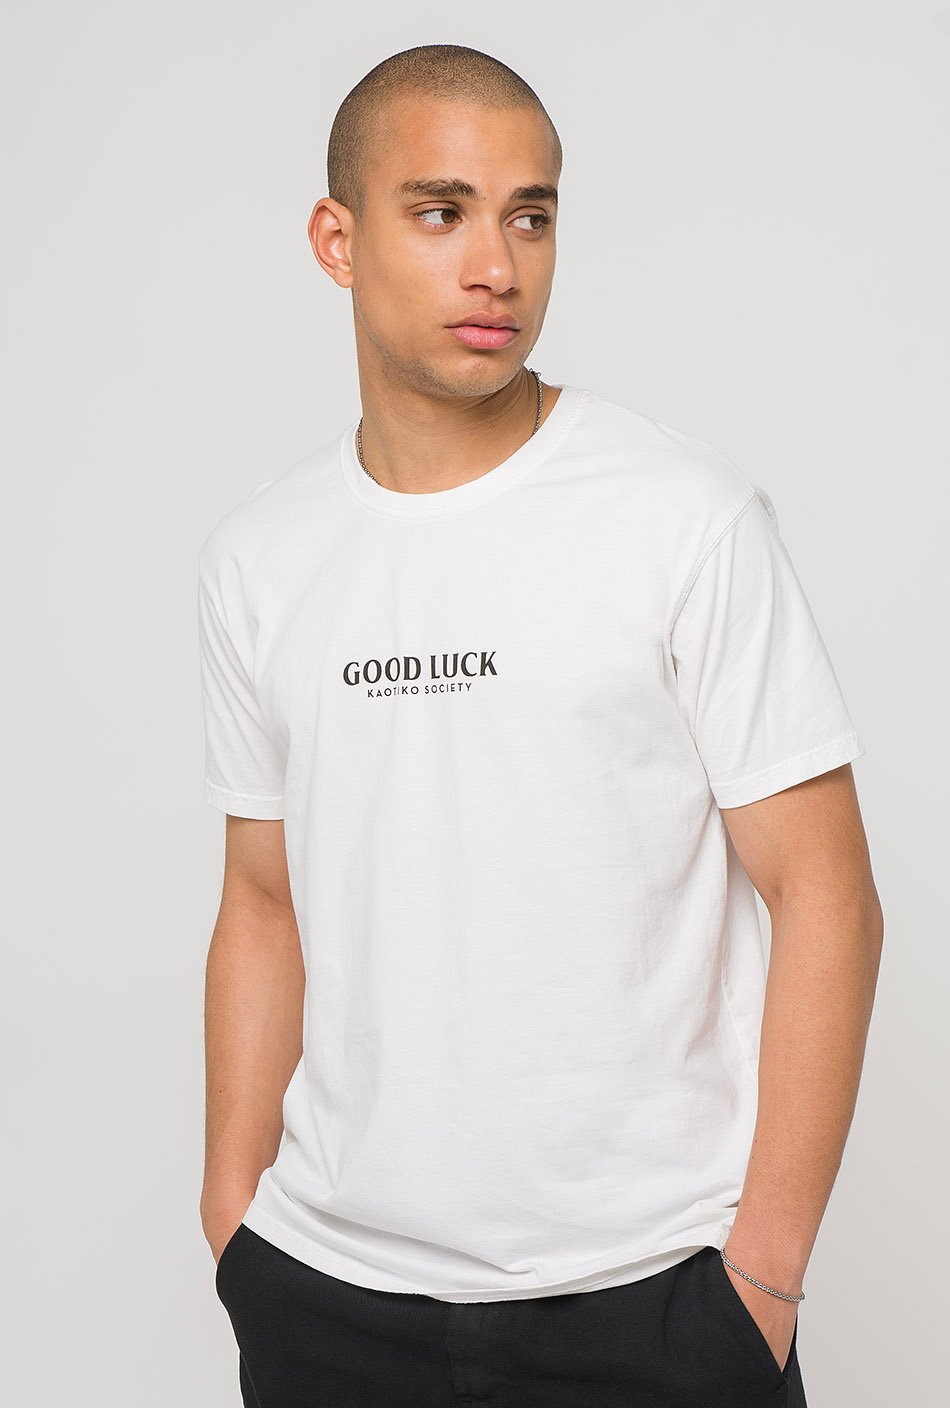 Camiseta "Good Luck" Blanca